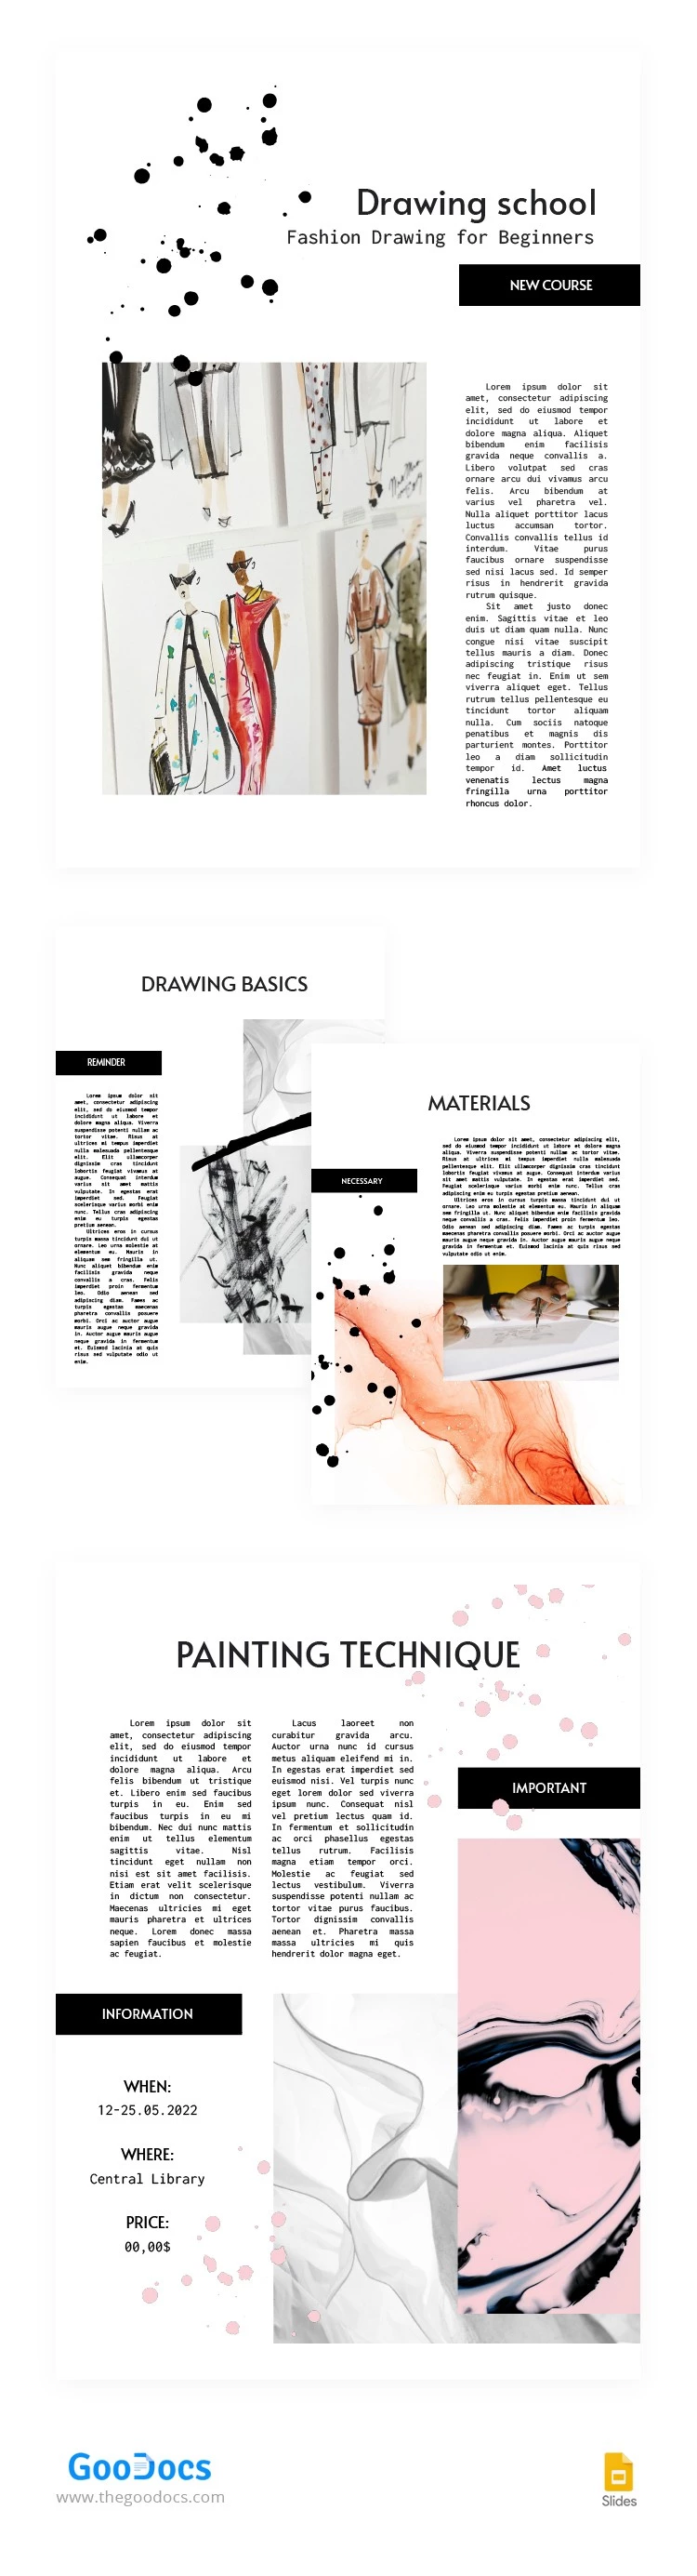 Bulletin de l'école de dessin - free Google Docs Template - 10062935